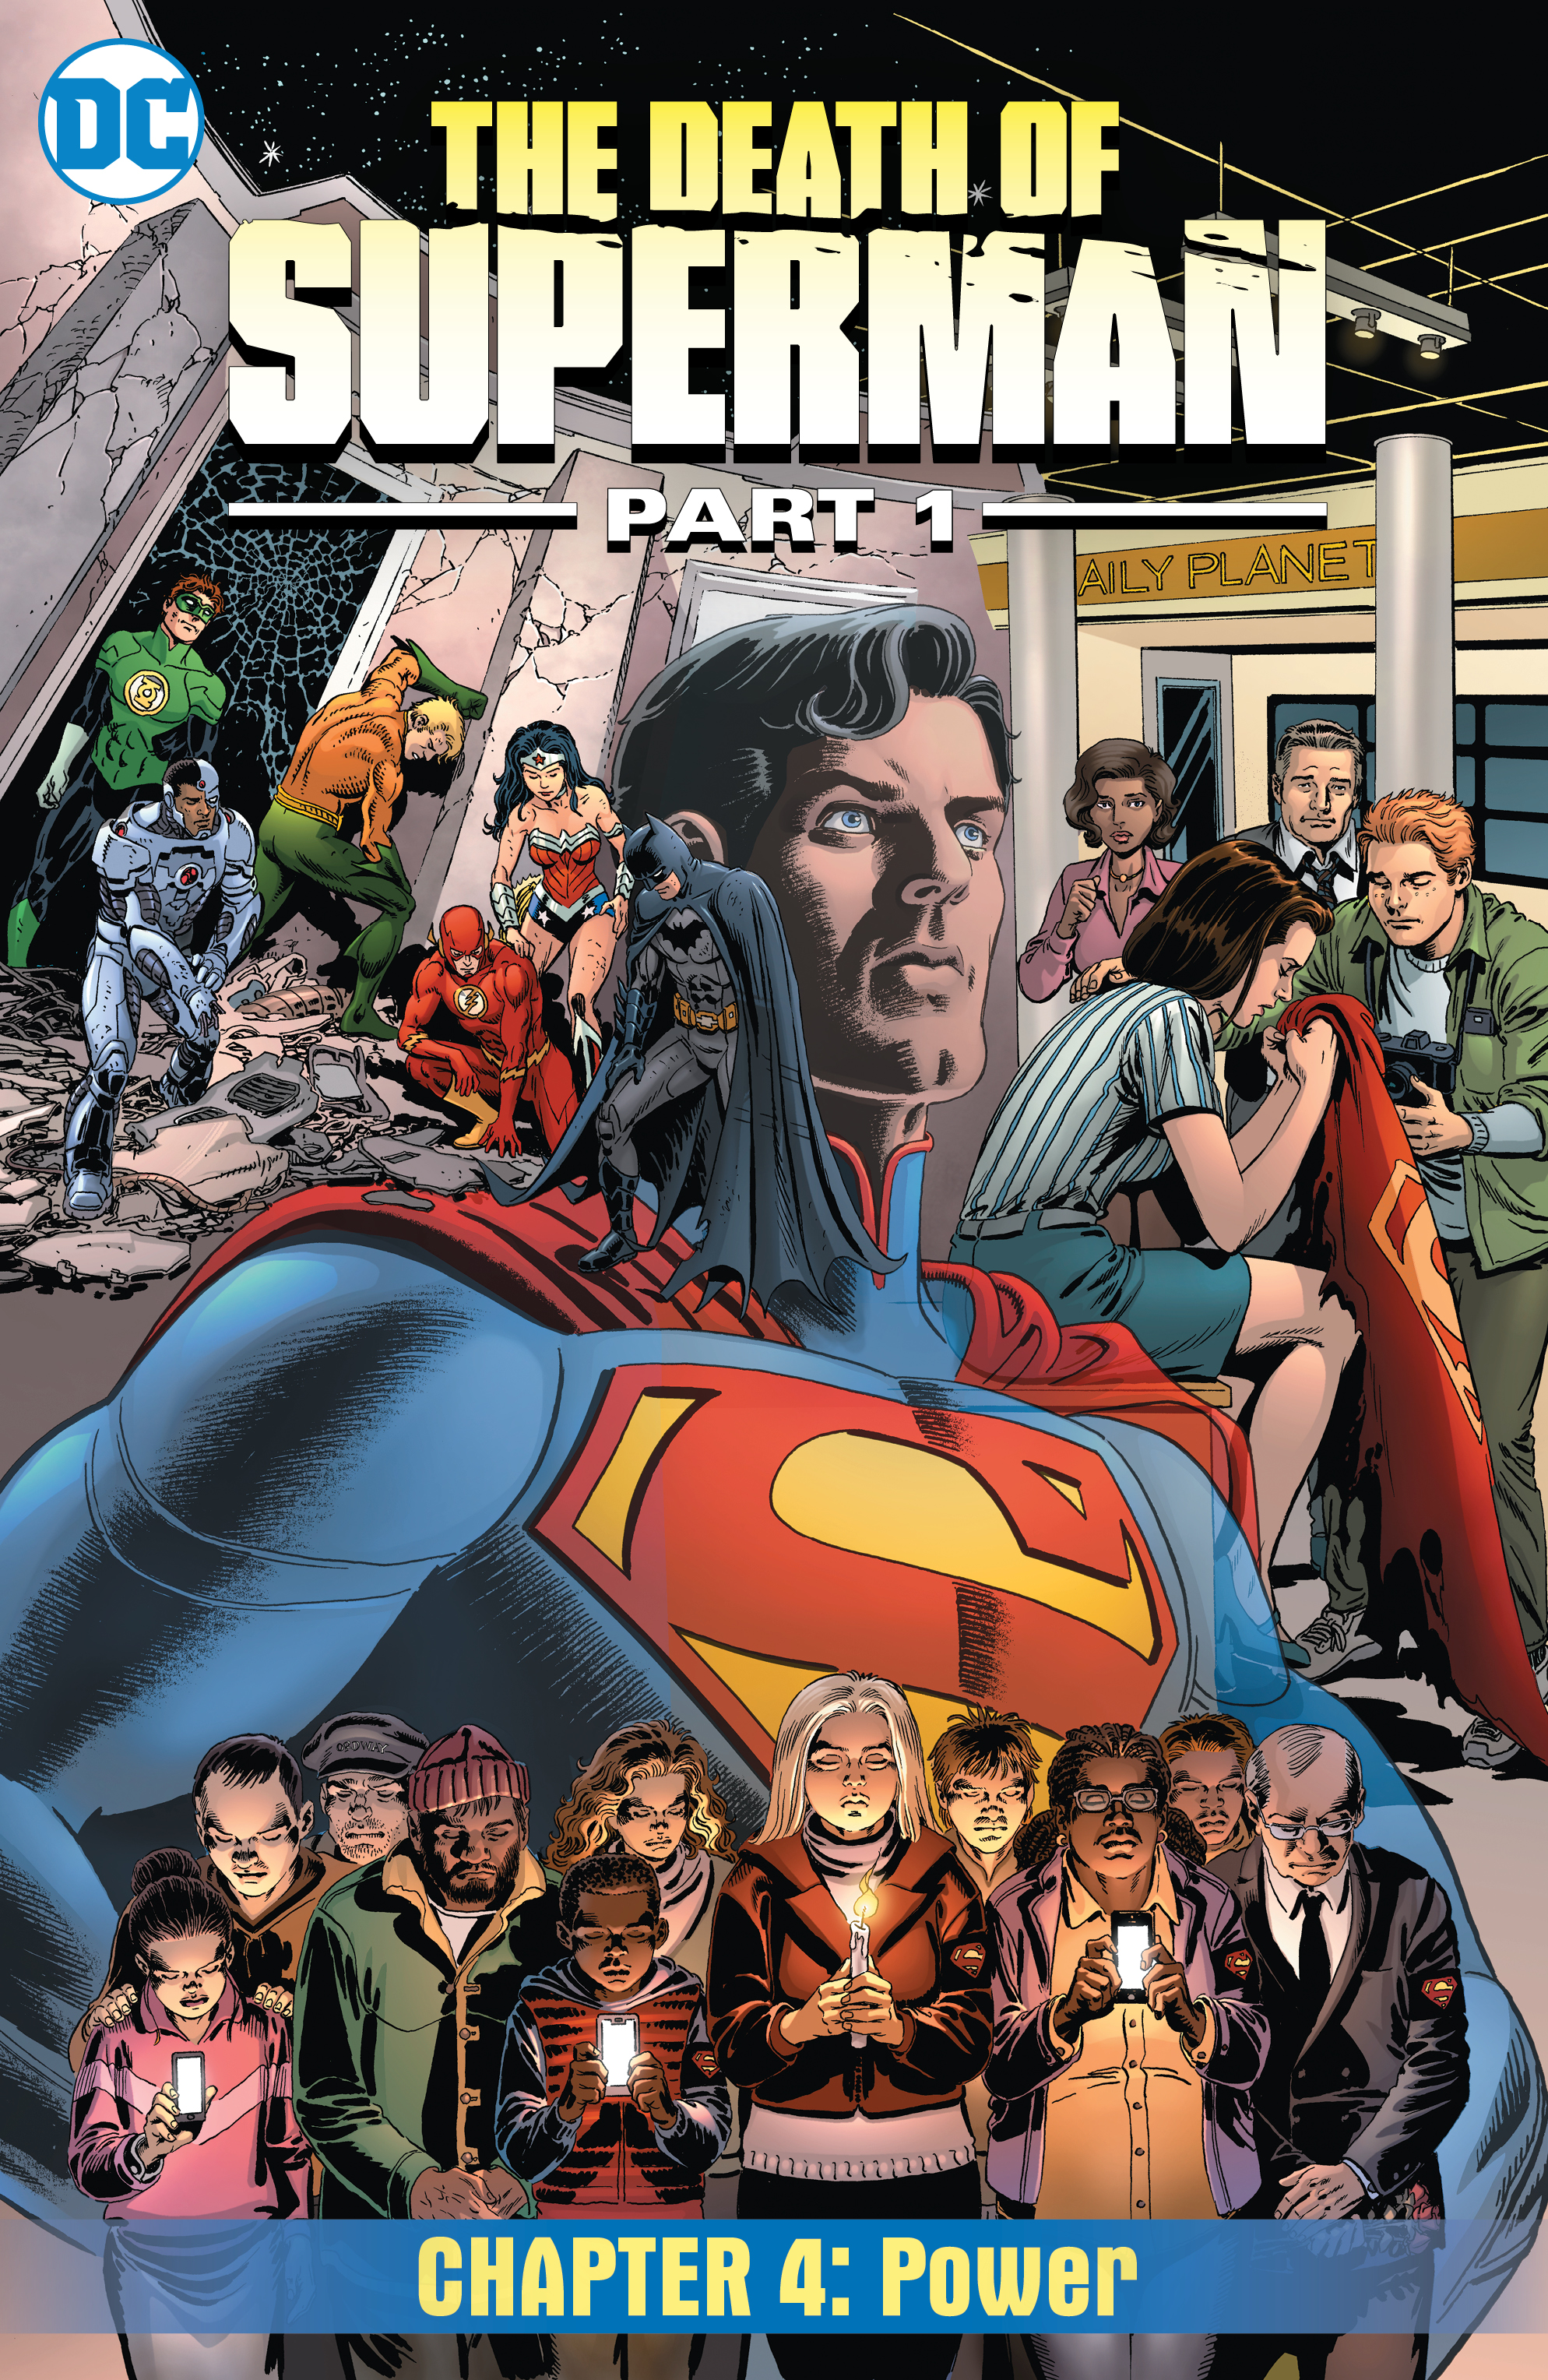 Death of Superman, Part 1 #4 preview images